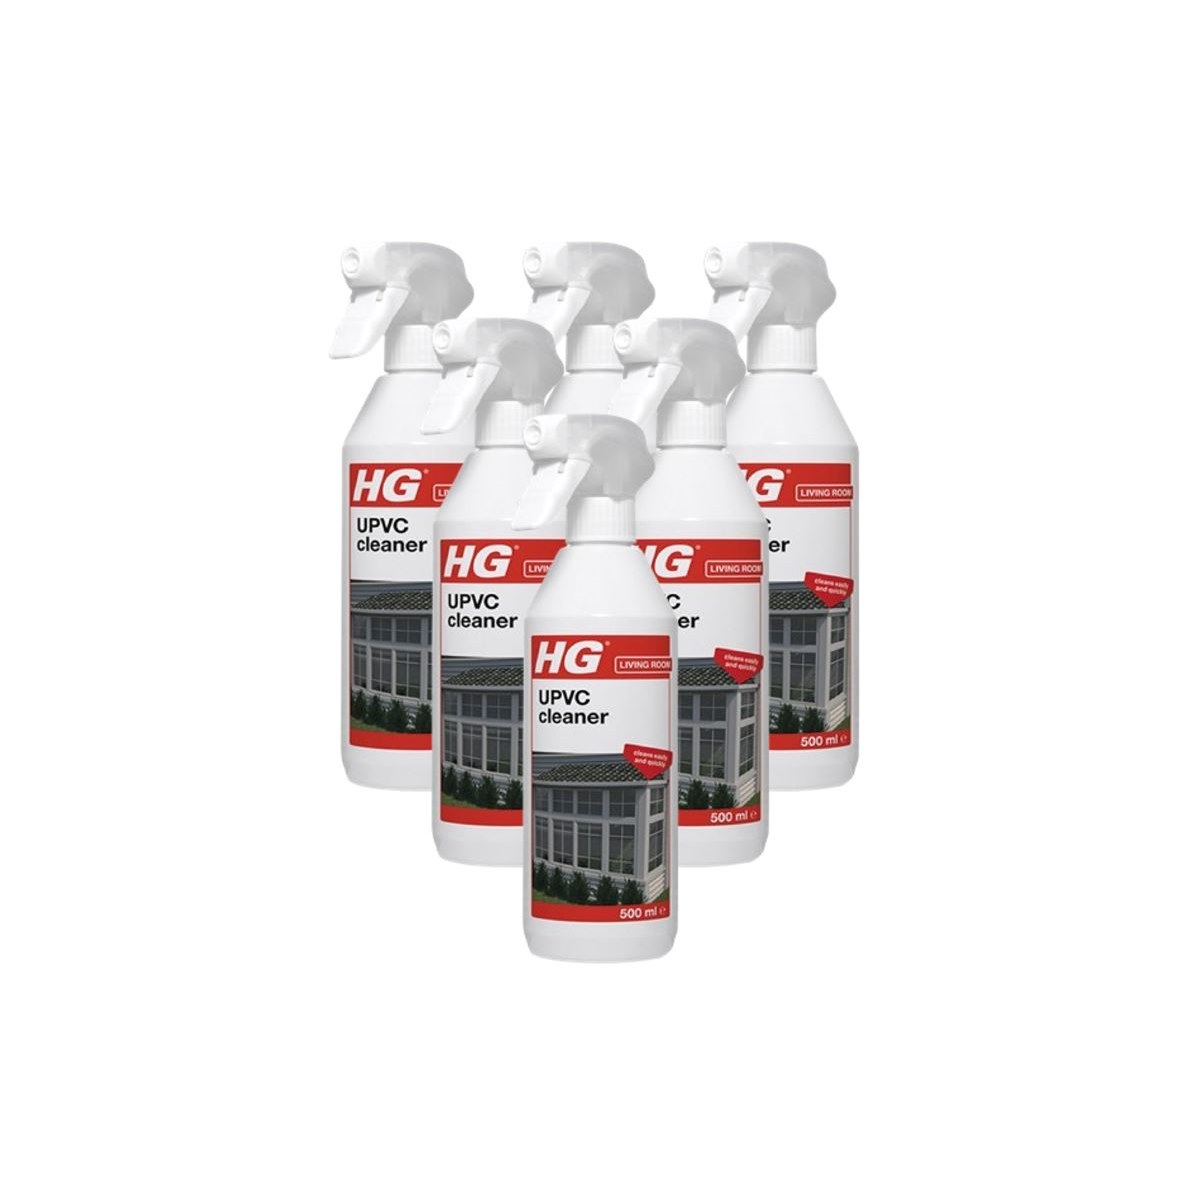 Case of 6 x HG UPVC Cleaner Spray 500ml